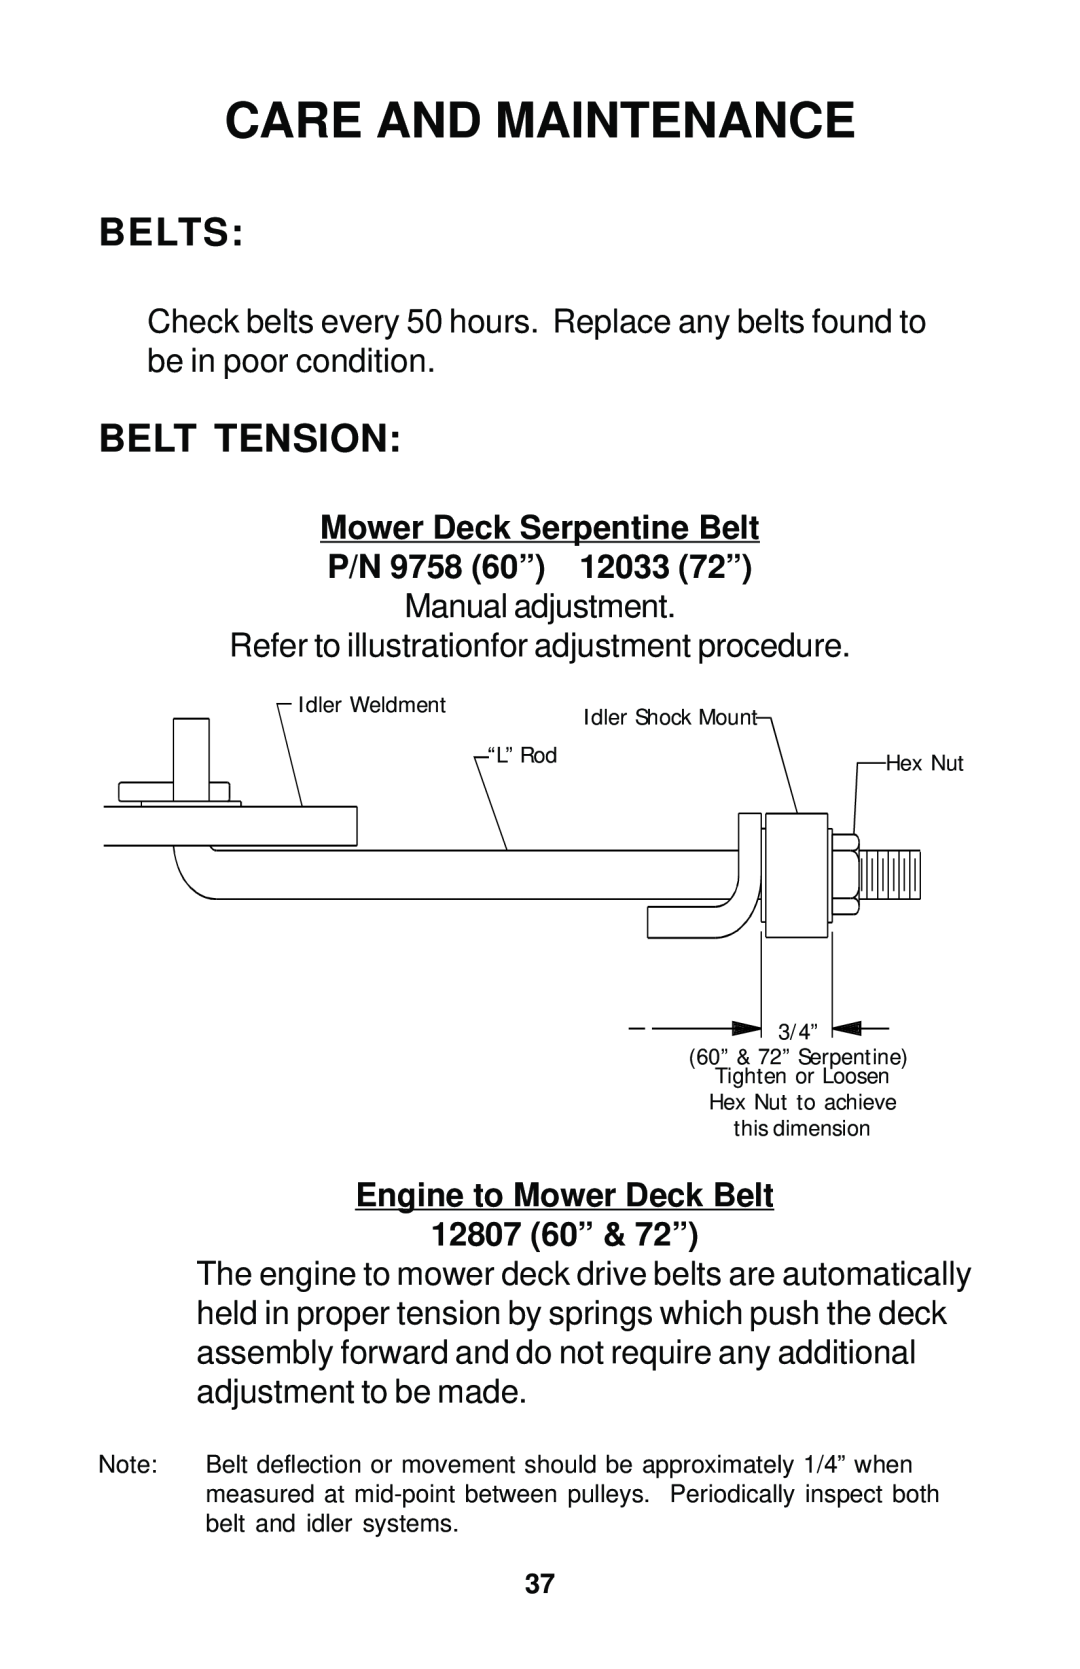 Dixon 12881-1104 manual Belts, Belt Tension, Care And Maintenance, Mower Deck Serpentine Belt P/N 9758 60” 12033 72” 